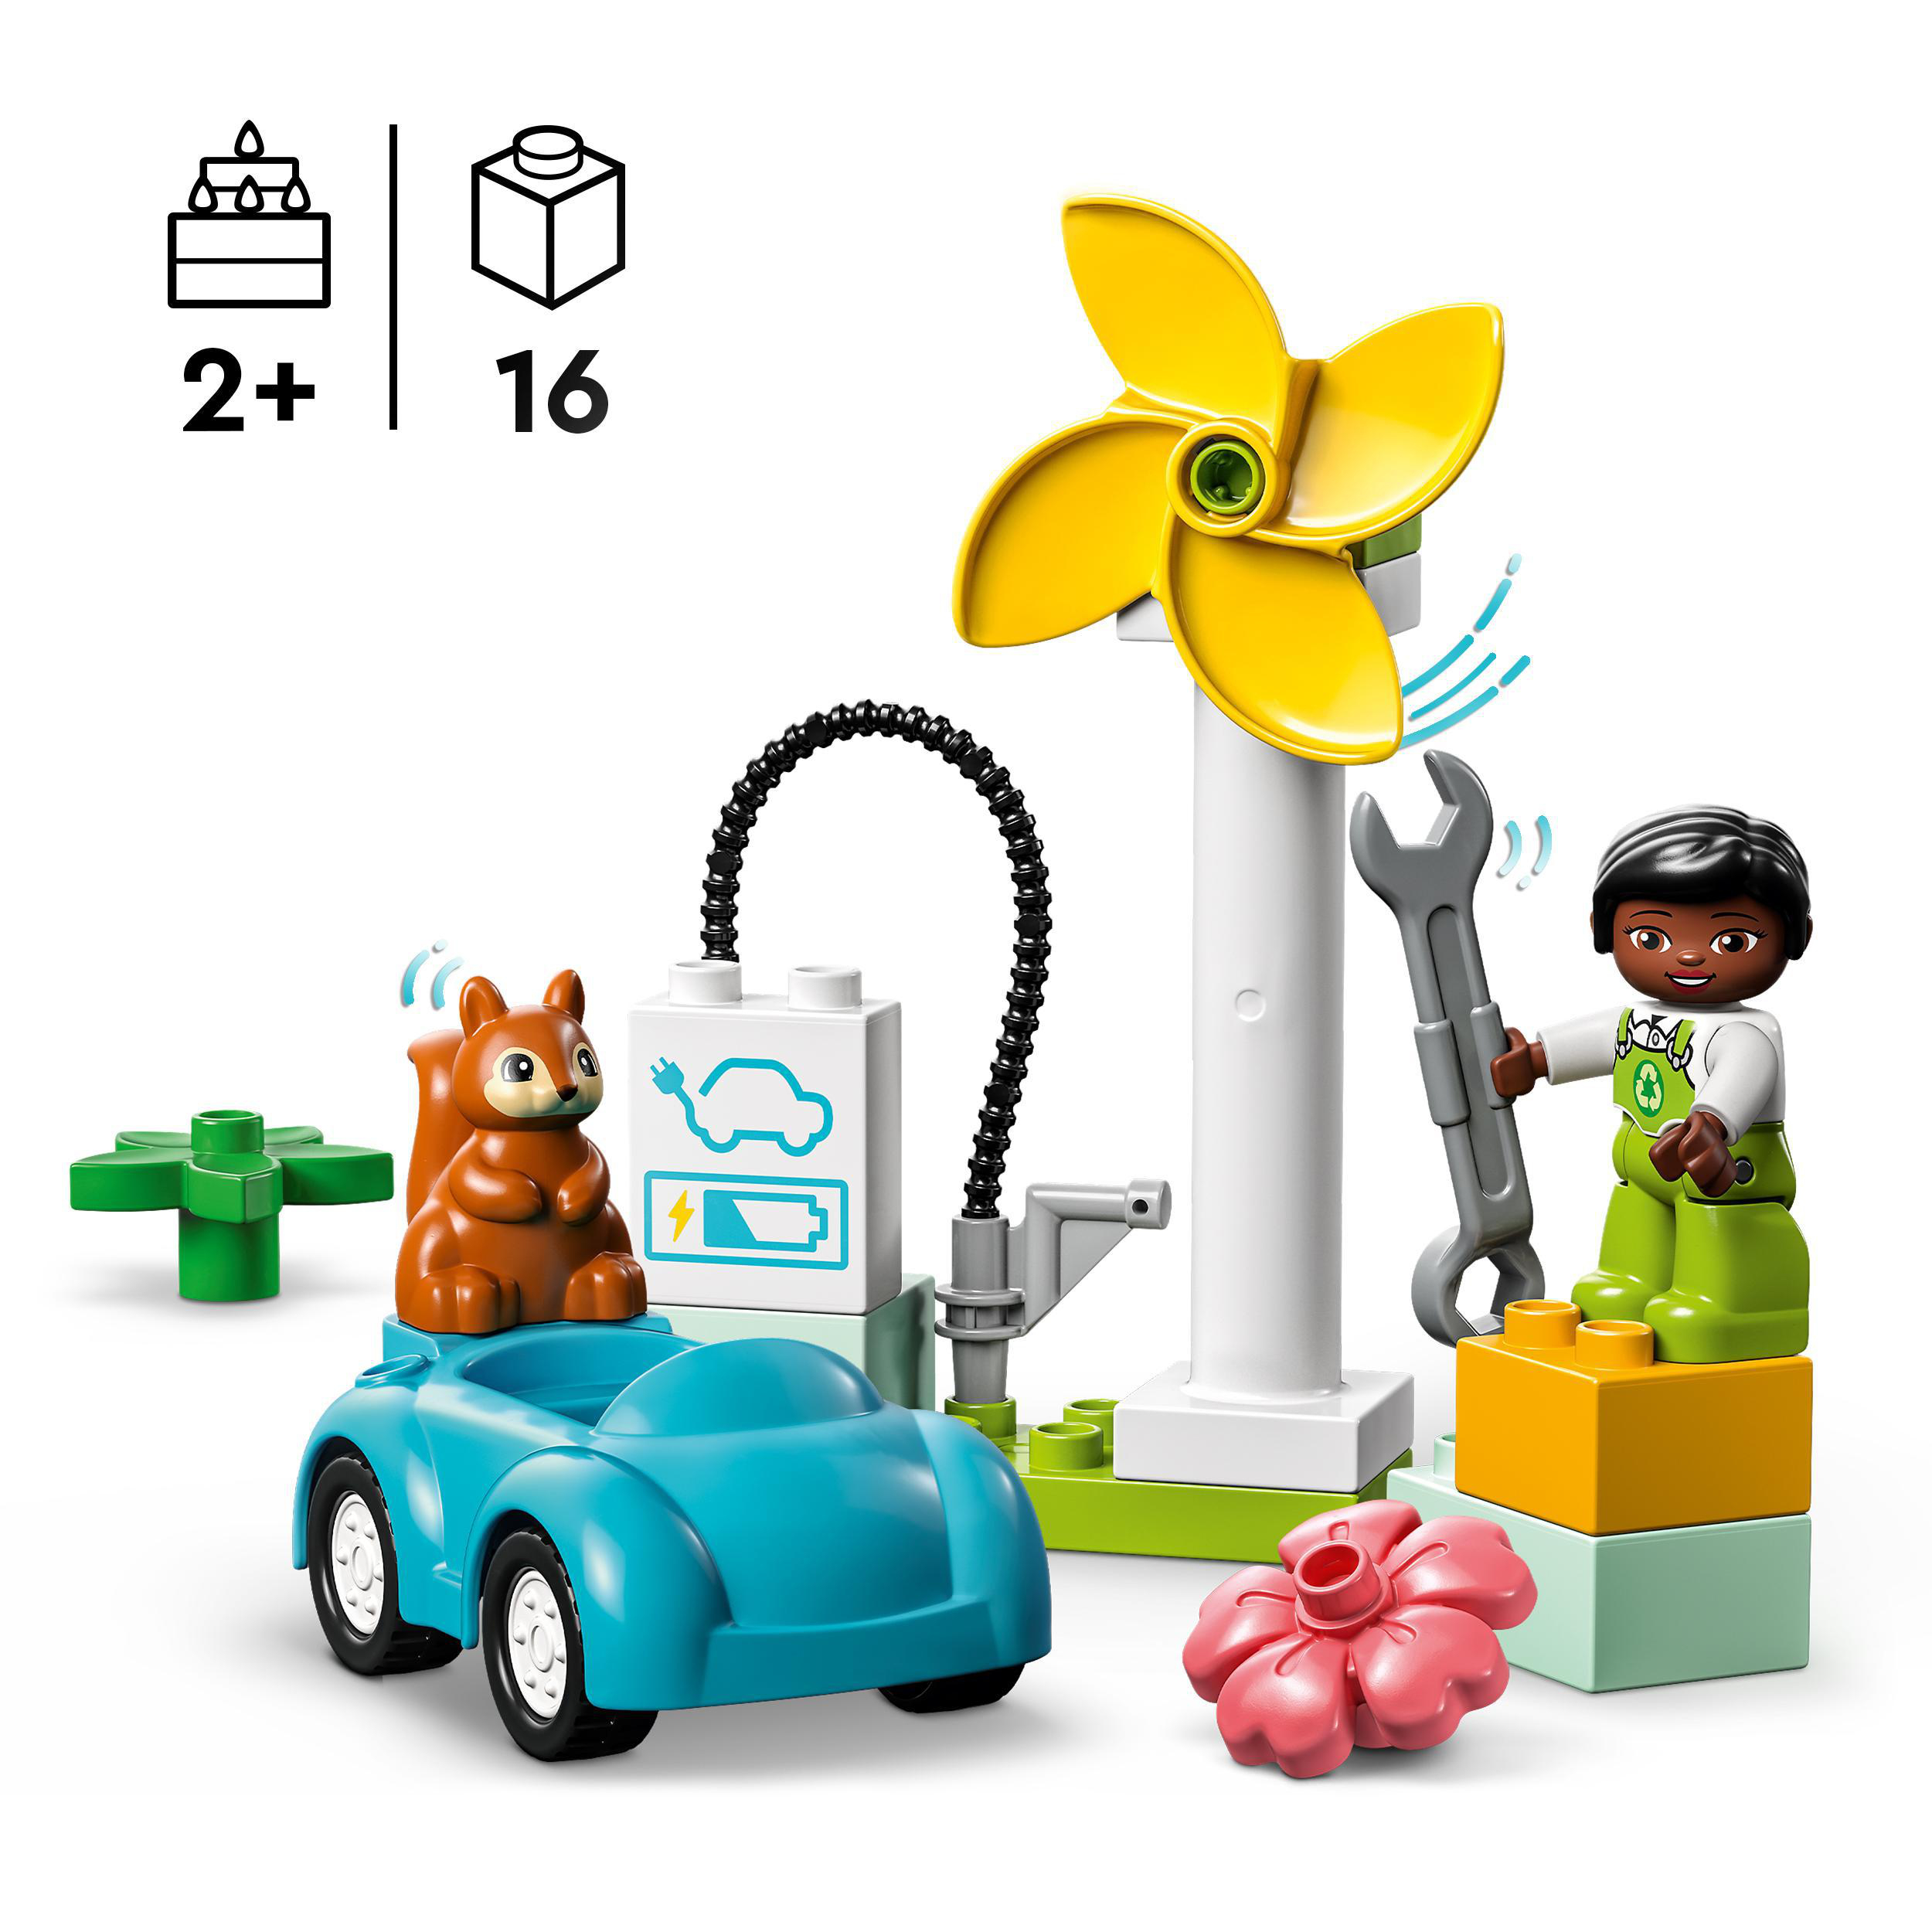 Windrad DUPLO LEGO Town und Elektroauto Mehrfarbig Bausatz, 10985